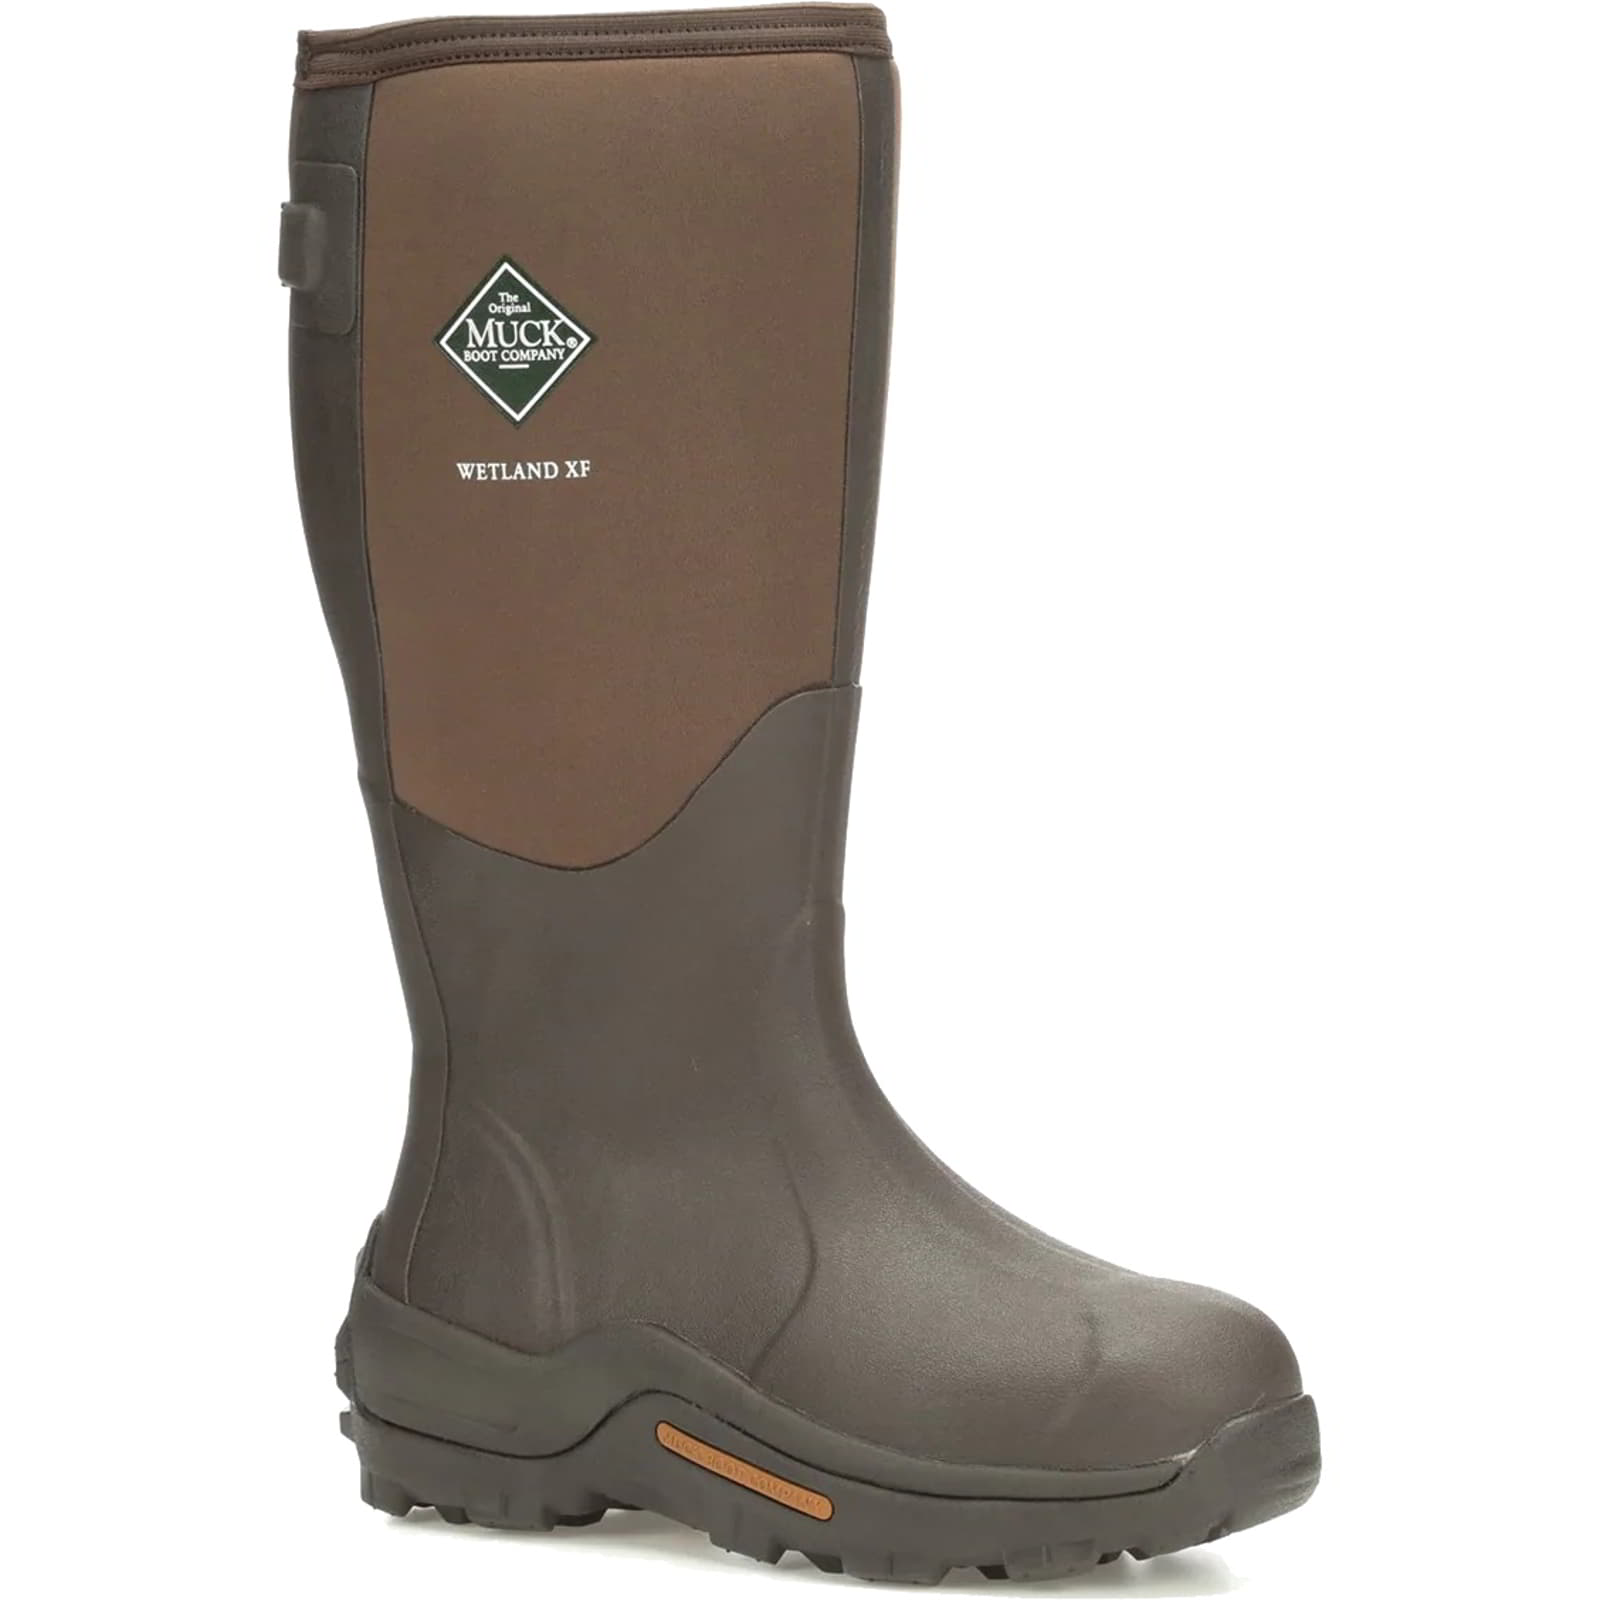 Muck Boots Men's Wetland XF Wide Calf Tall Adjustable Wellingtons Boots - UK 8 / EU 42